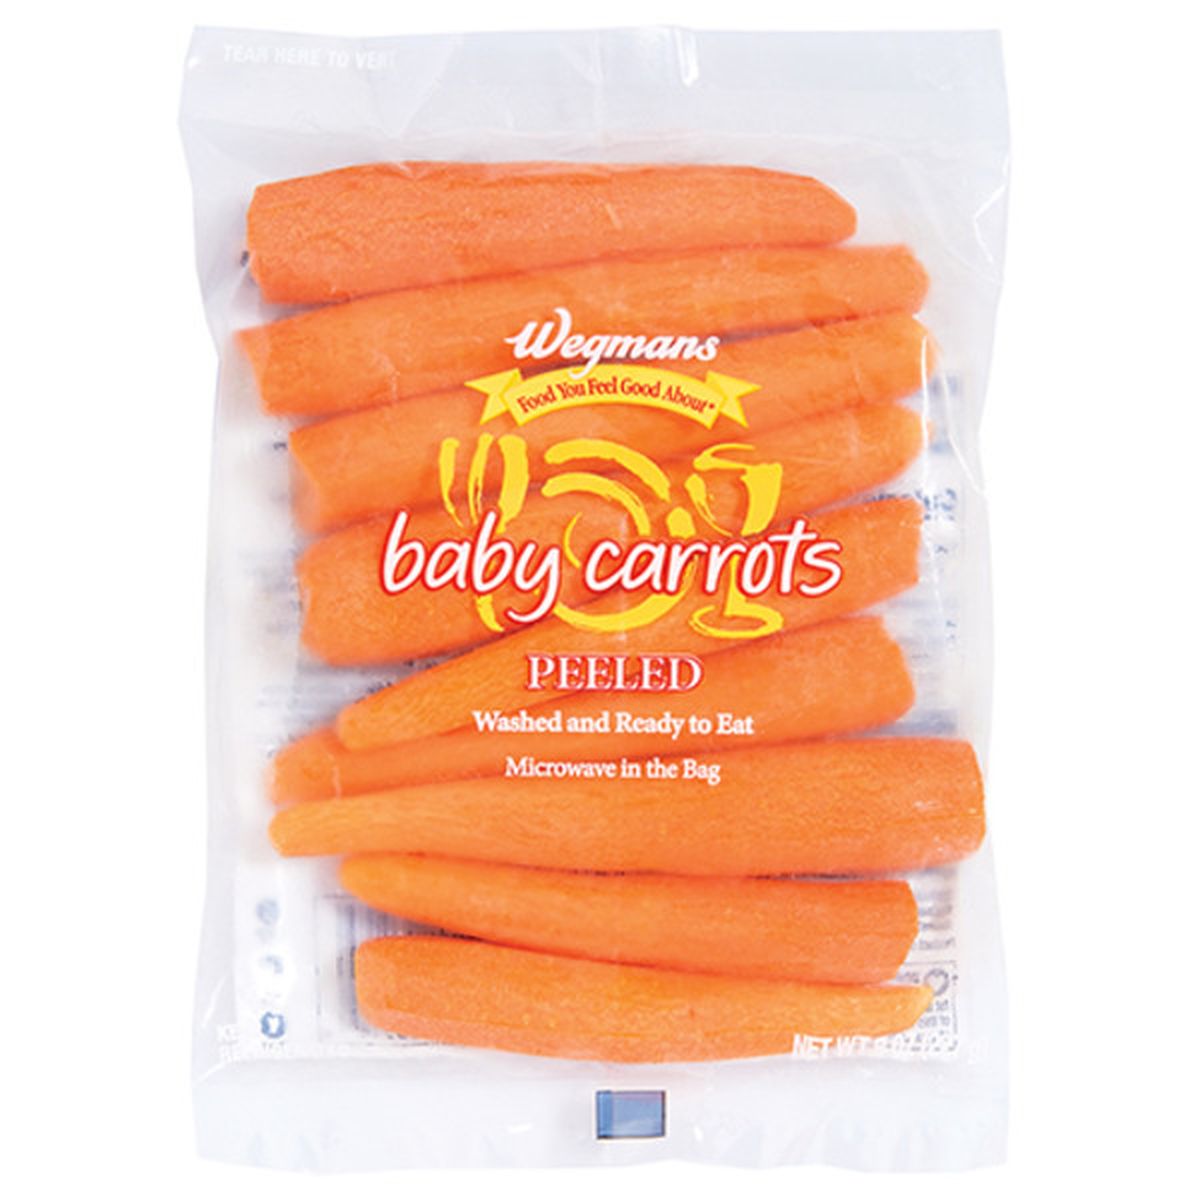 Calories in Wegmans Peeled Baby Carrots